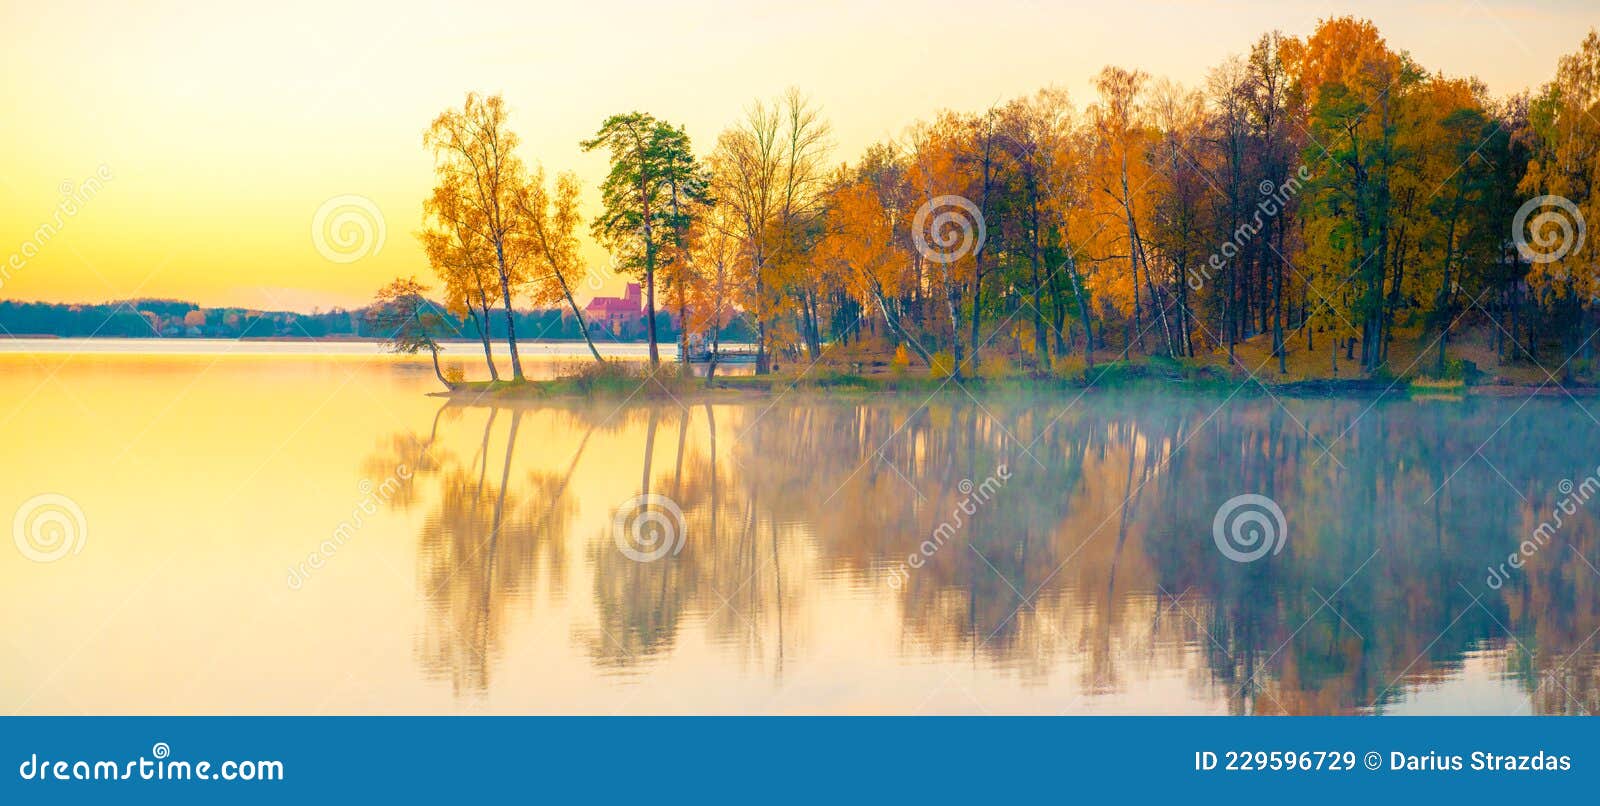 Scenic Beautiful Fall Autumn Lake Landscape Scenery at Sundown Stock Image  - Image of background, beautiful: 229596729